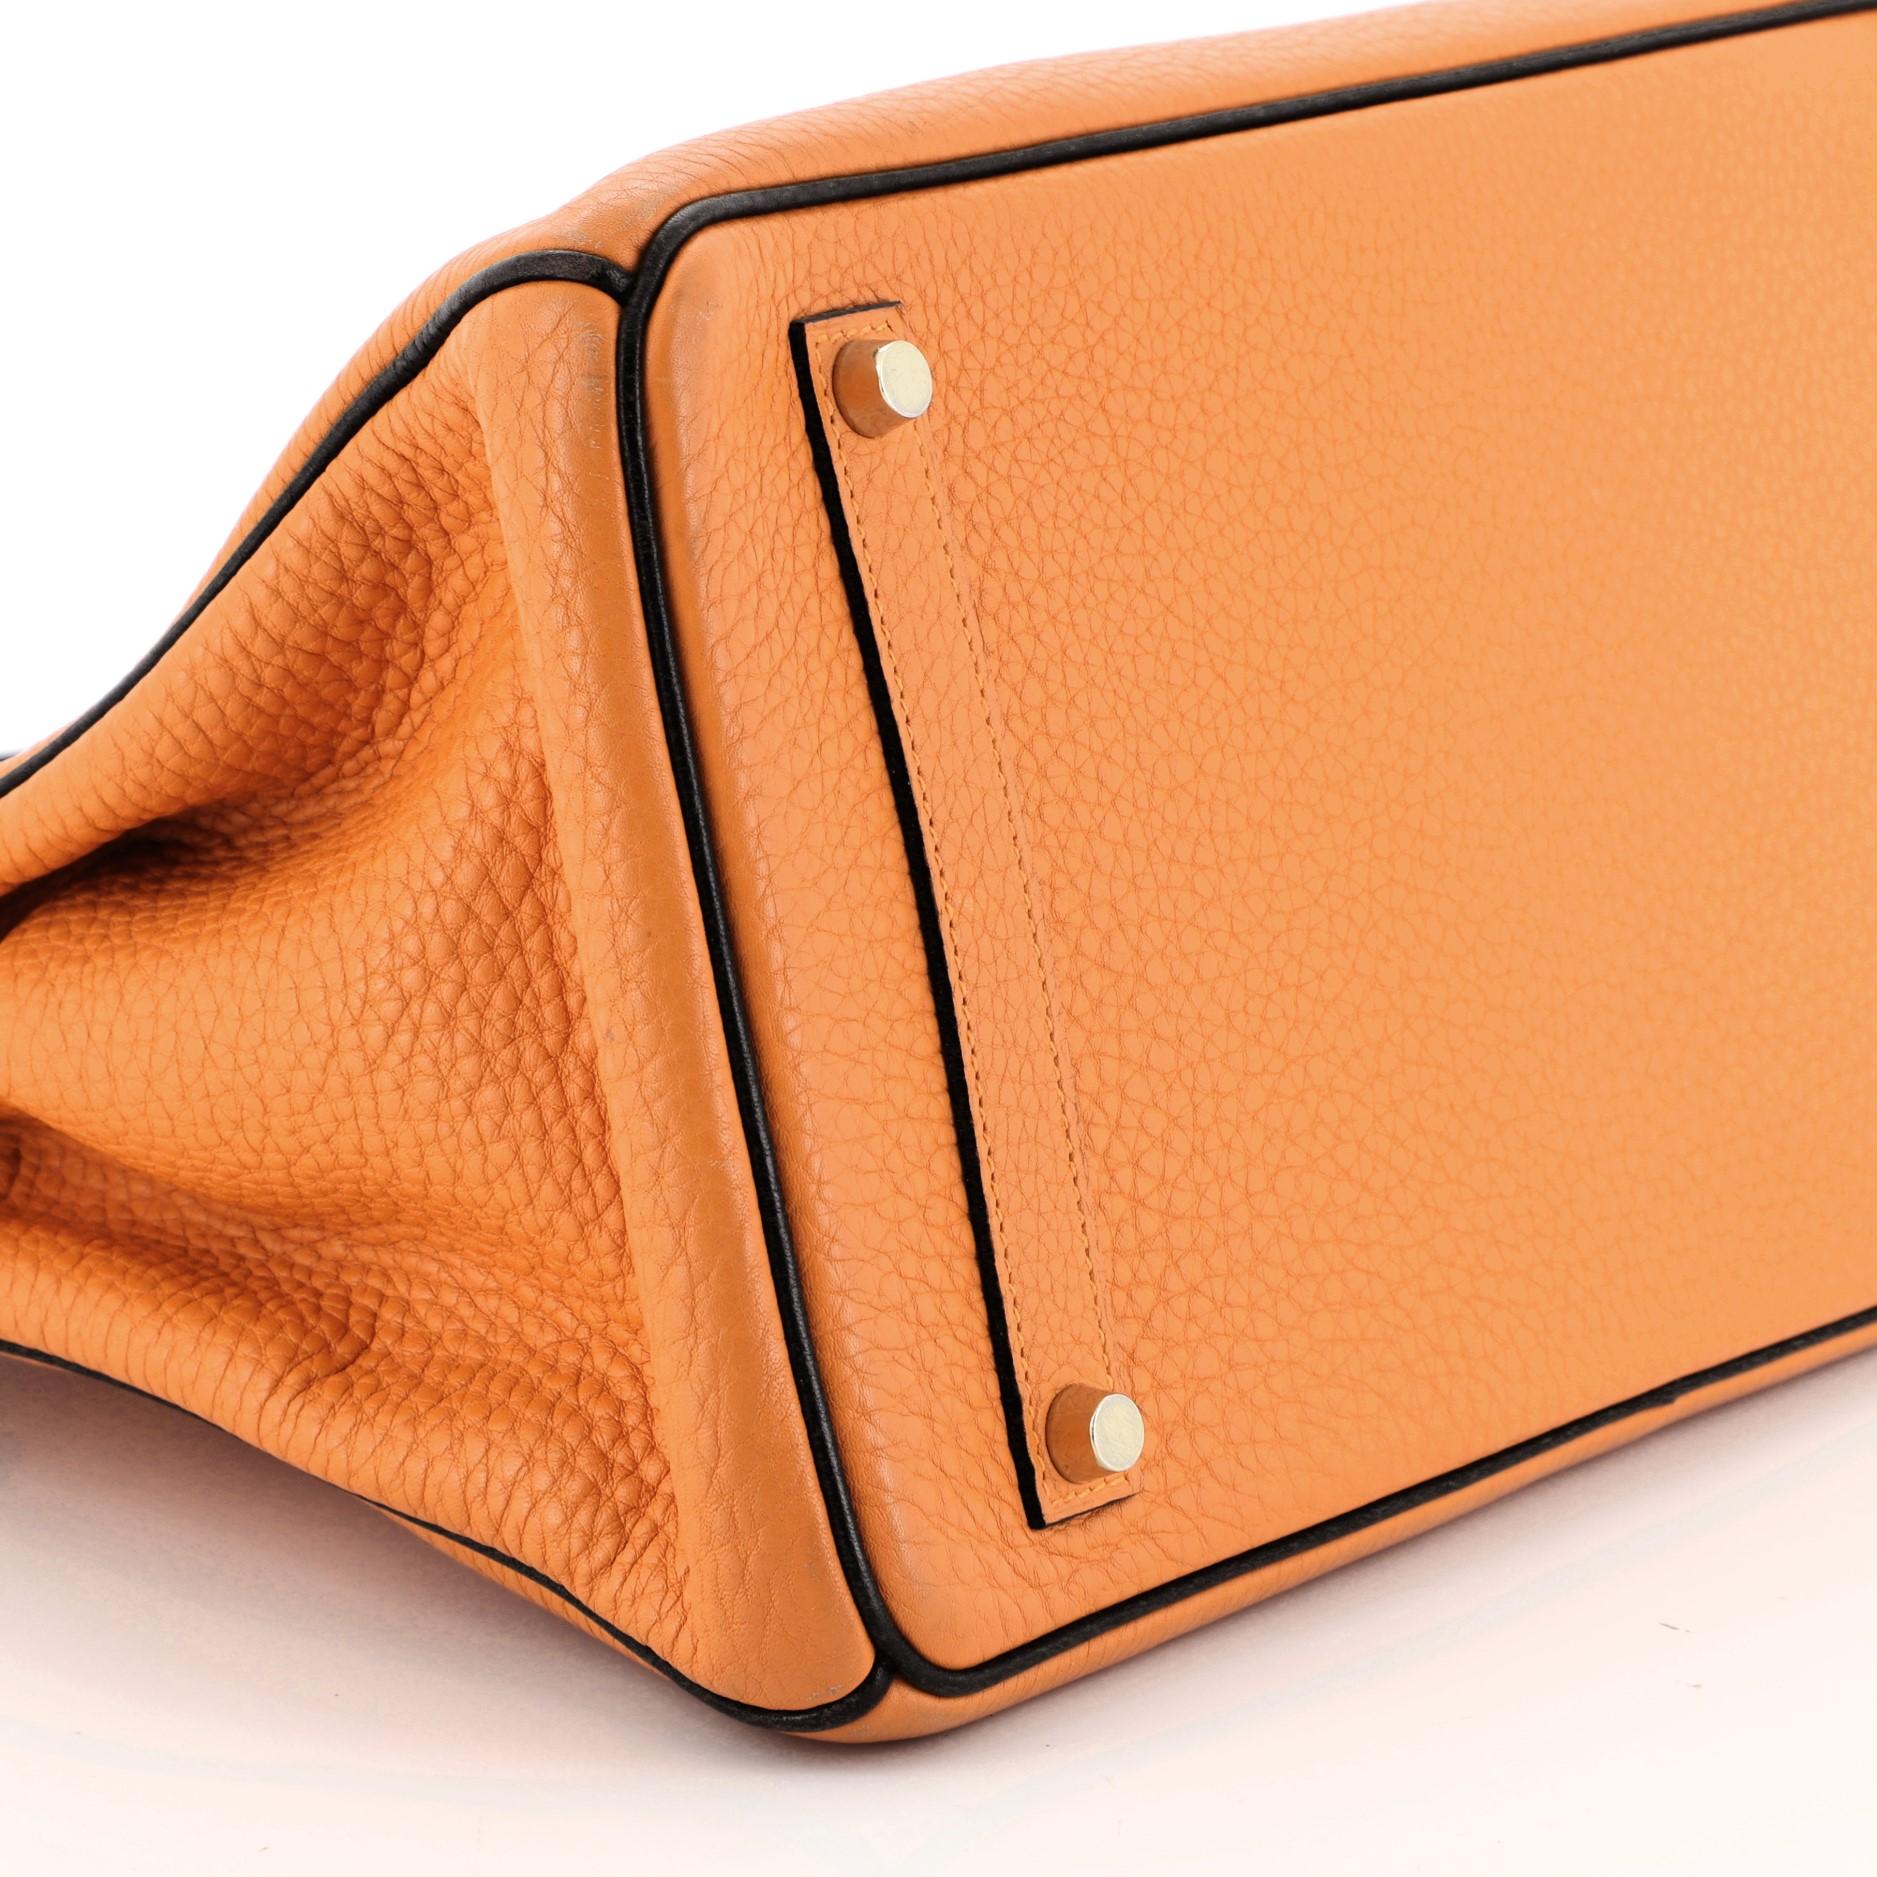 Hermes Birkin Handbag Bicolor Clemence With Gold Hardware 35 2